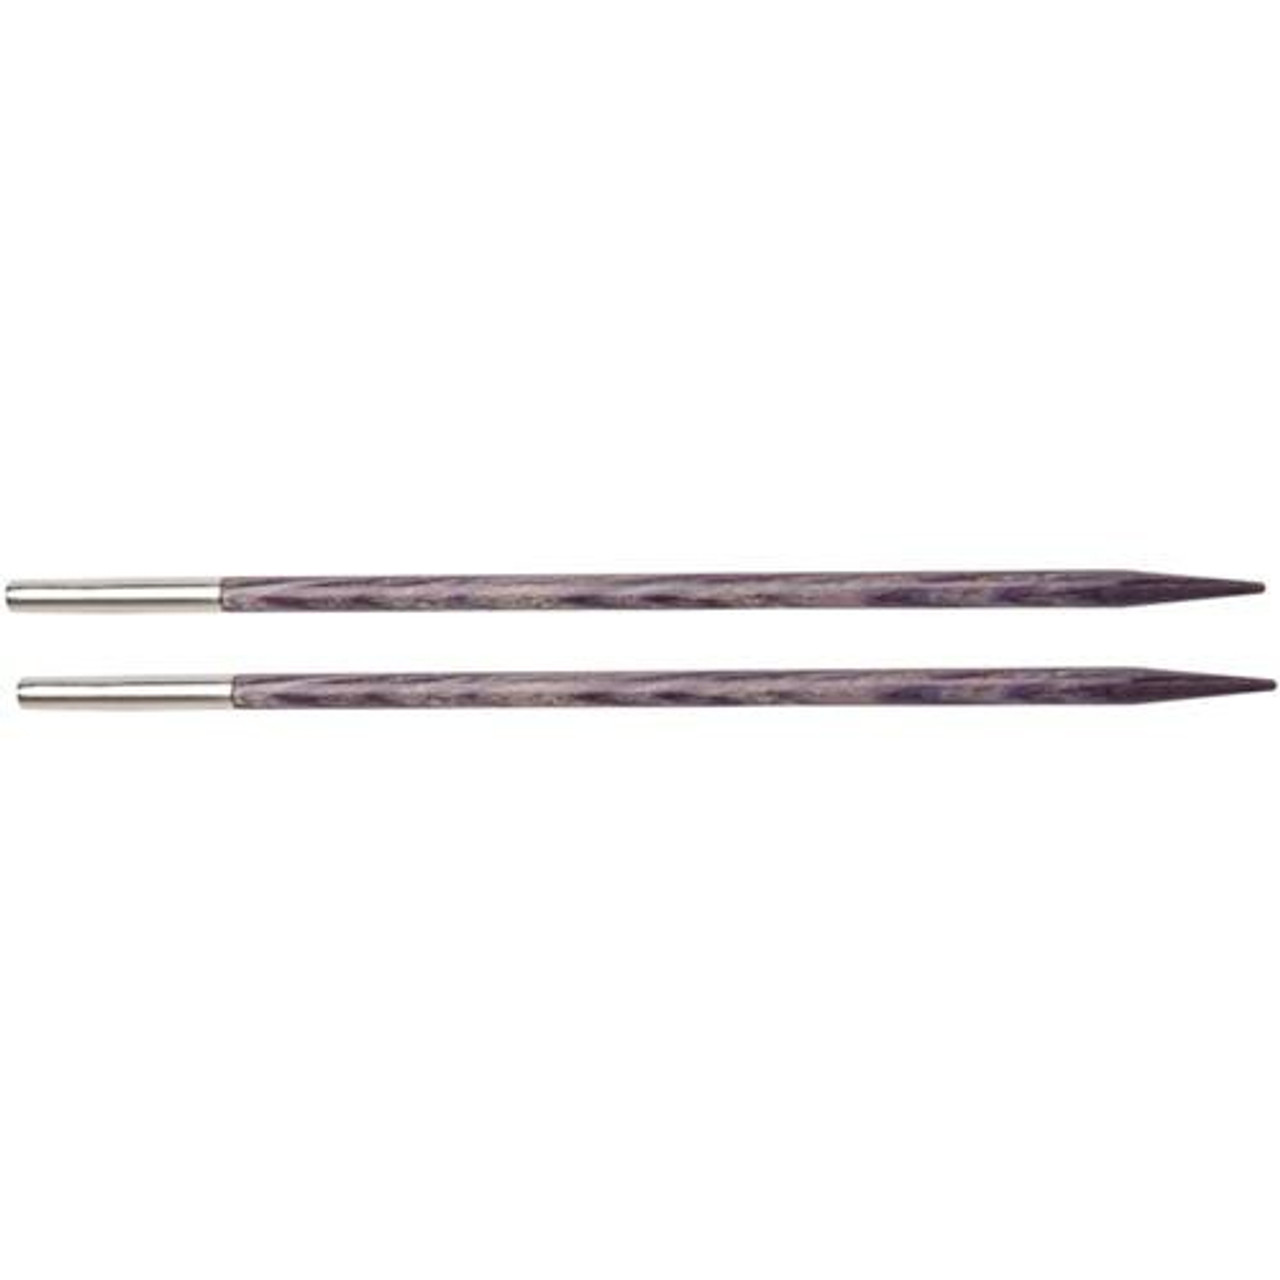  Dreamz Special Interchangeable Needles-Size 10/6mm